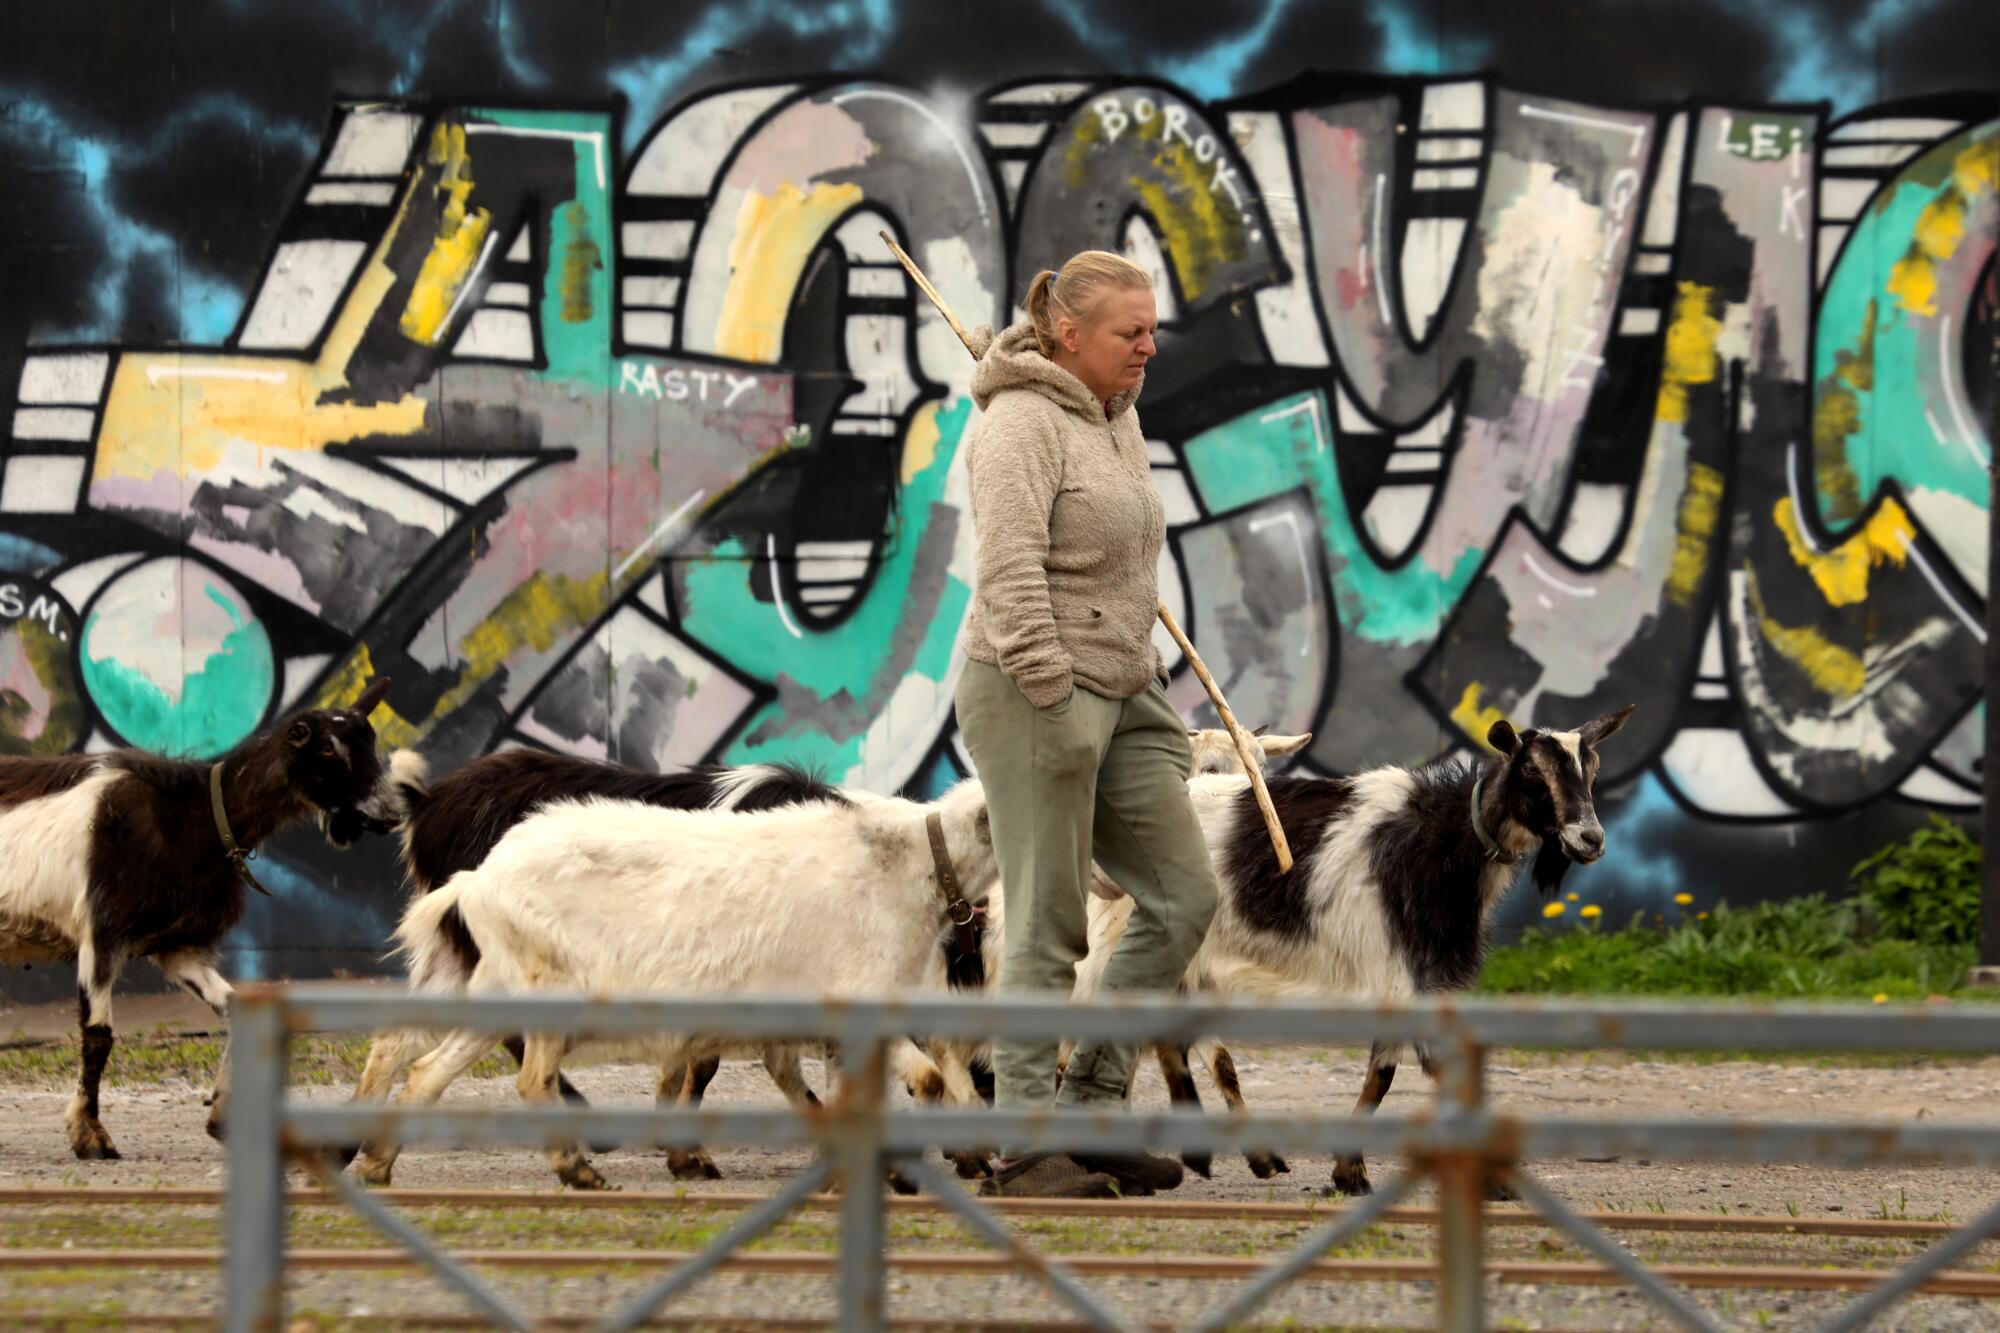 In the Saltivske area of Kharkiv, Ukraine, a woman grazes her goats, as life goes on despite Russian shelling.